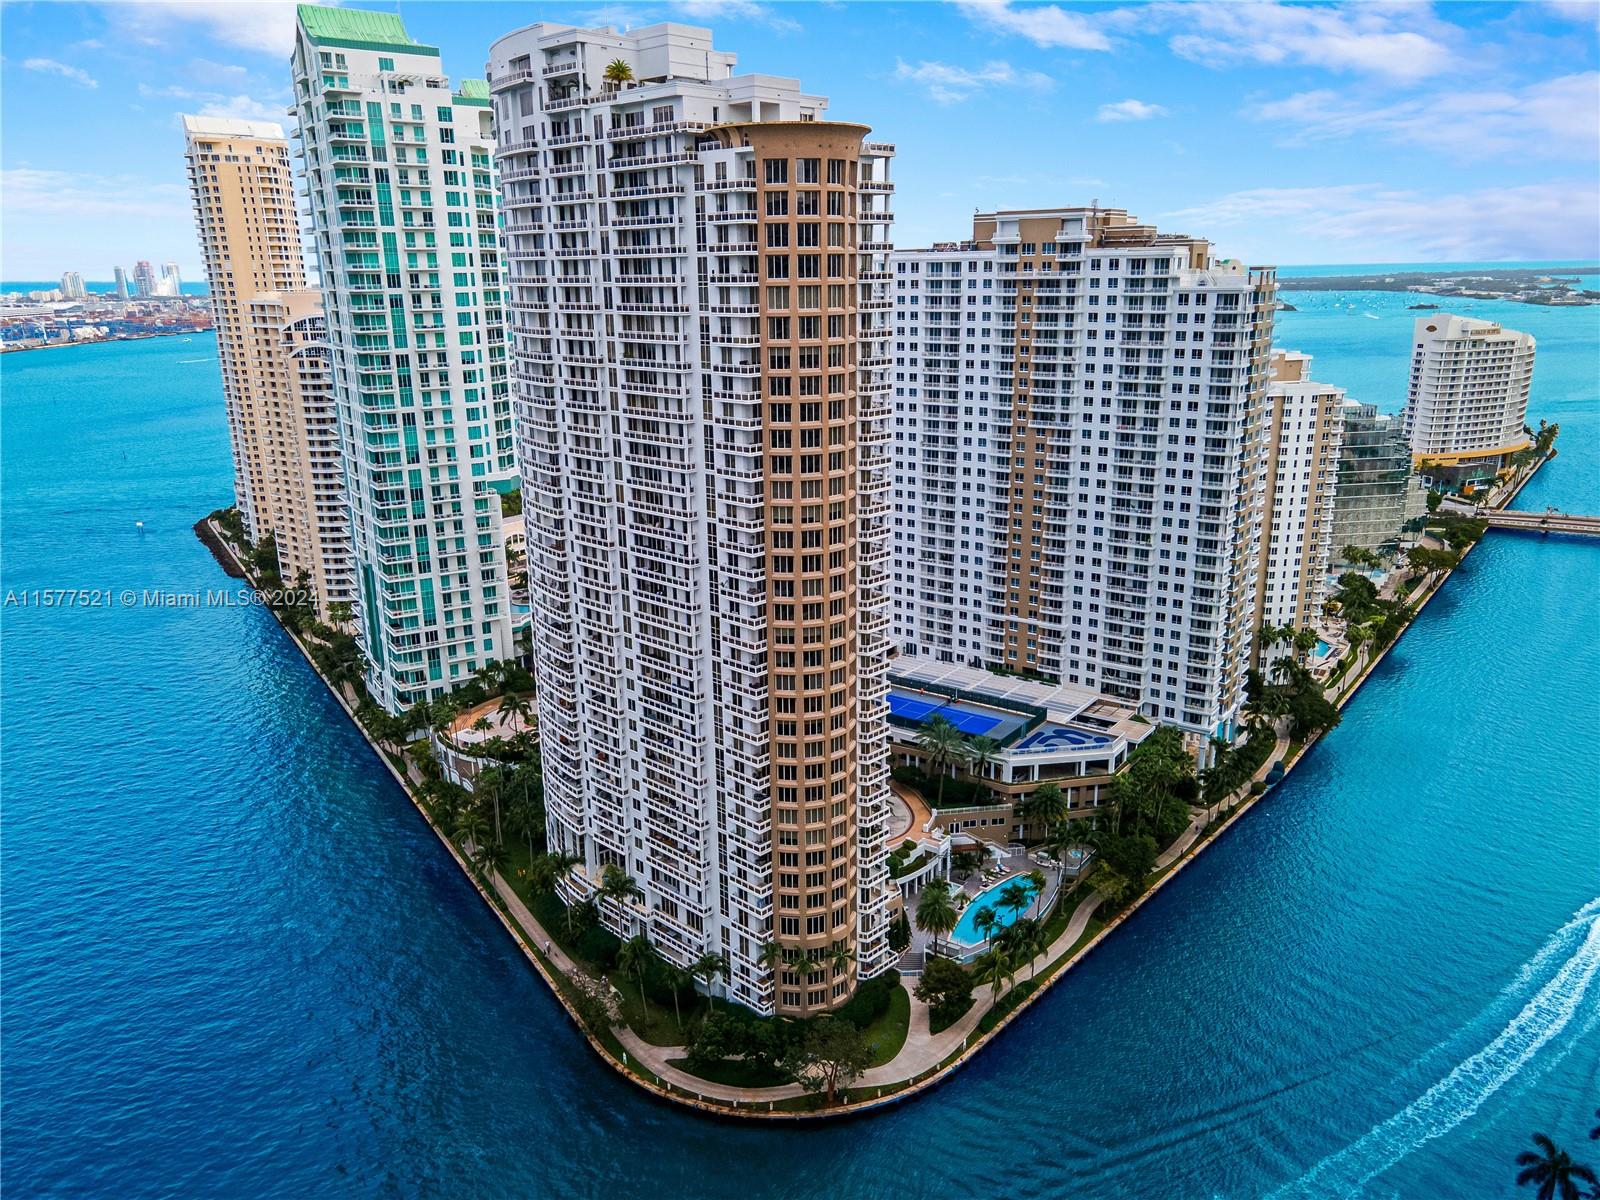 Property for Sale at 901 Brickell Key Blvd 609, Miami, Broward County, Florida - Bedrooms: 2 
Bathrooms: 3  - $1,275,000